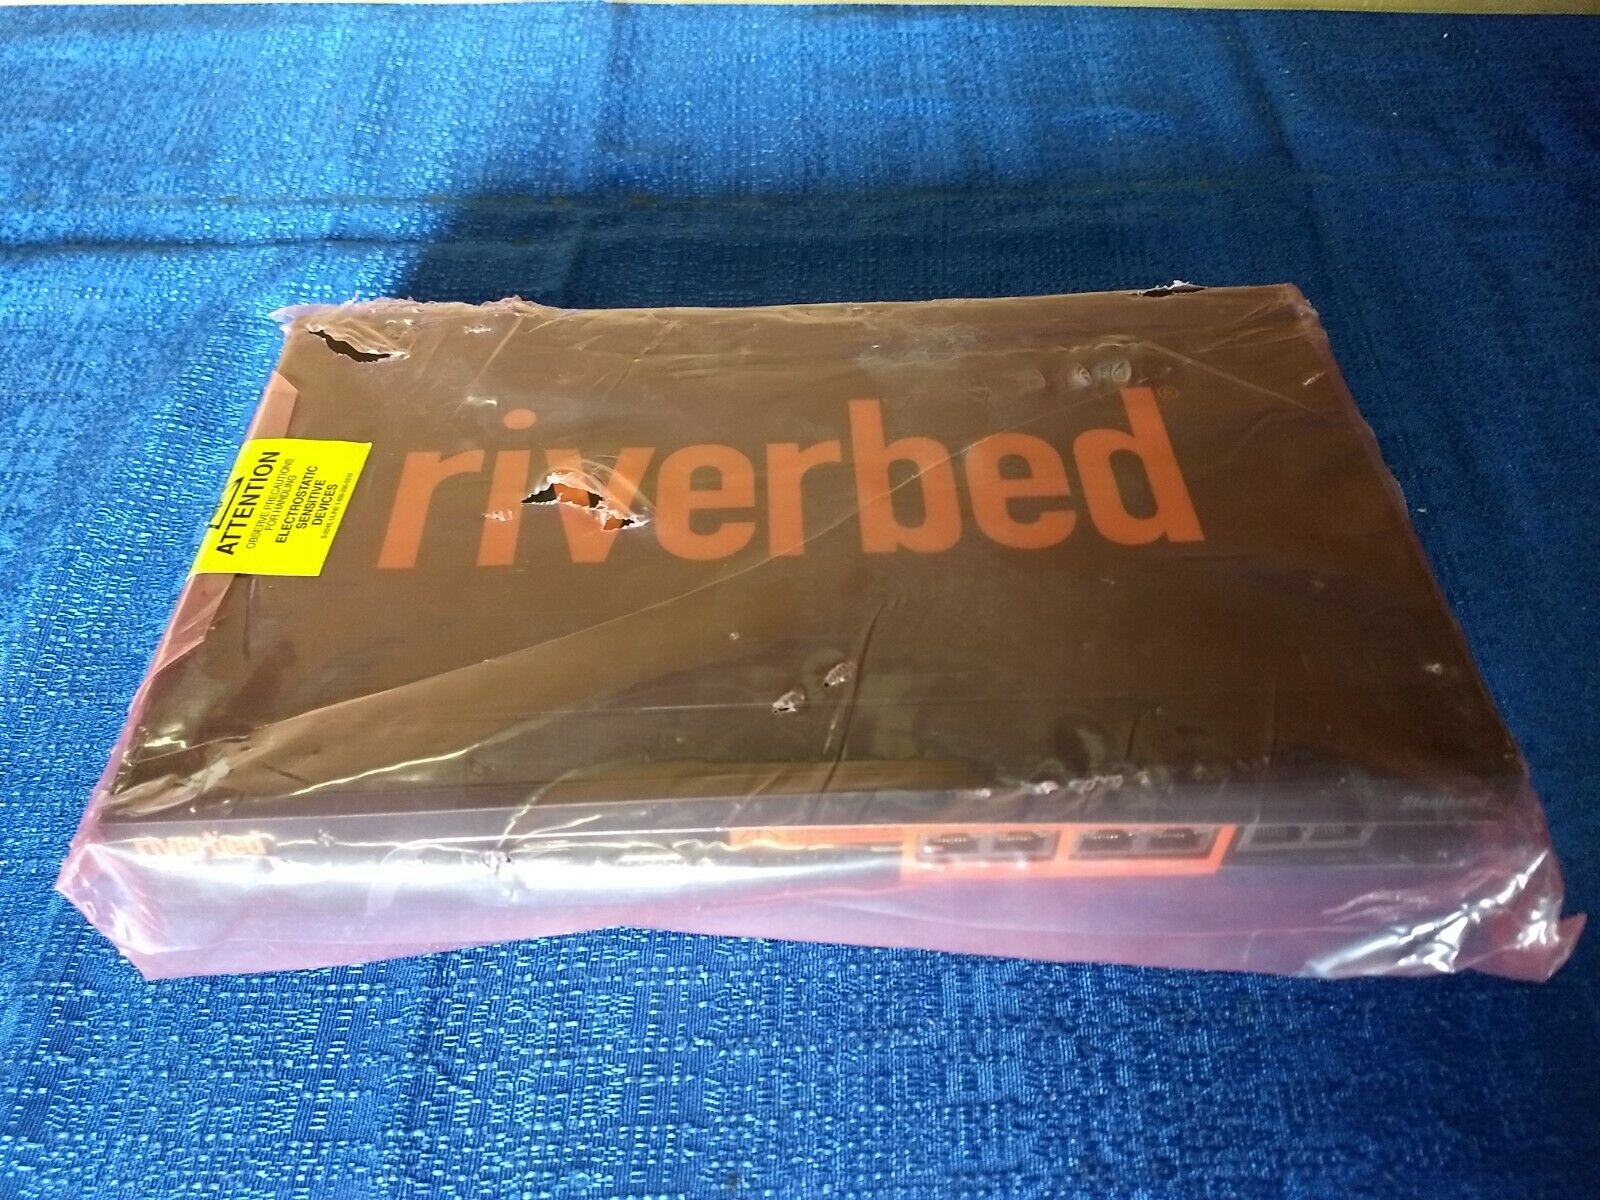 Riverbed Steelhead Cxa-00555 B010-e